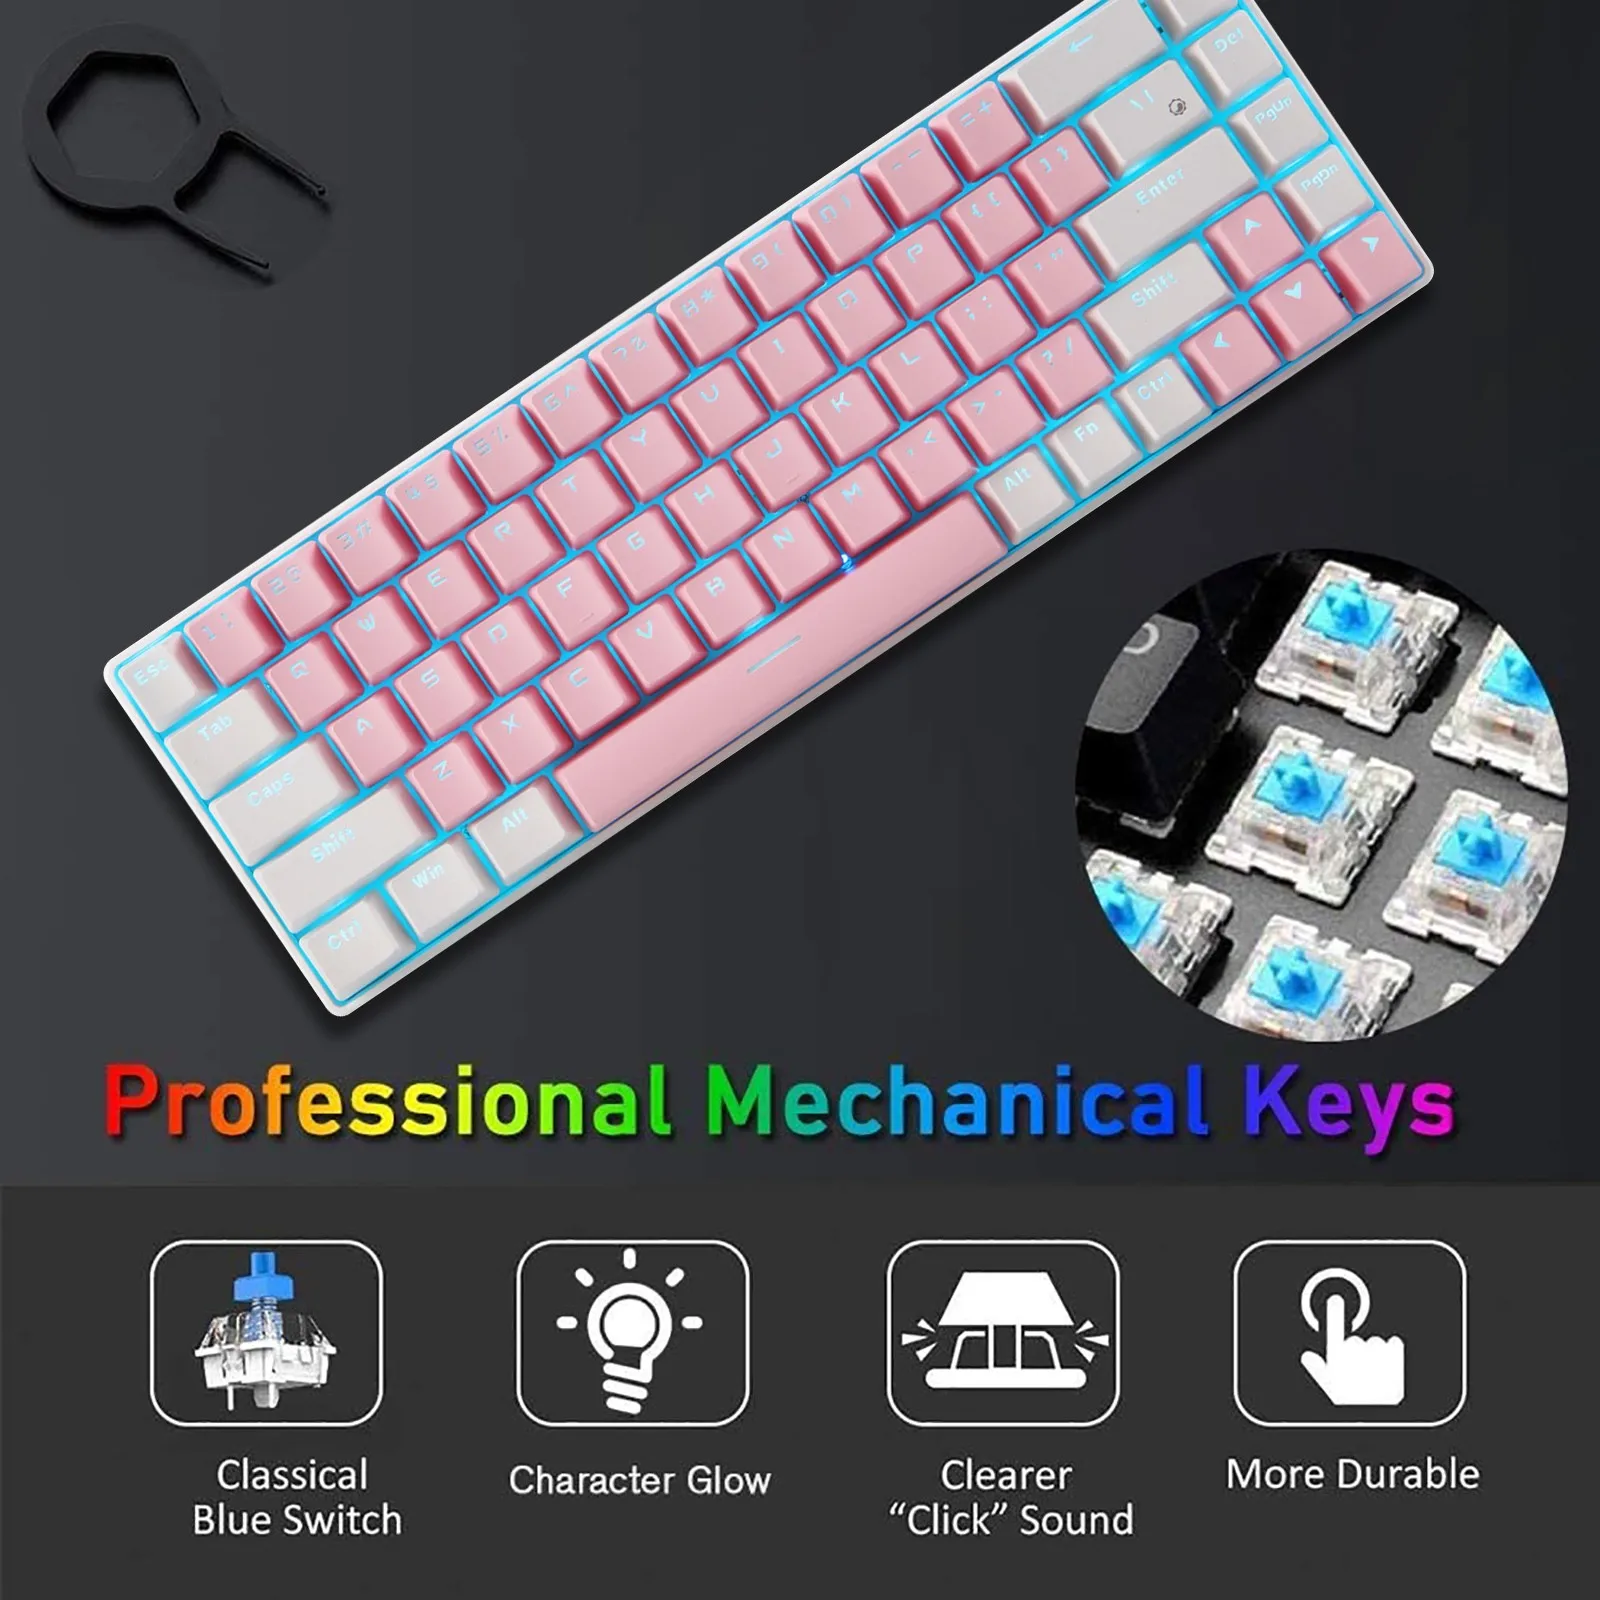 

K800 Wireless Illuminated Keyboard Windows 10 Home Key Code Wireless USB/wired Blue 68-key Gaming Keyboard 60% Game Pads